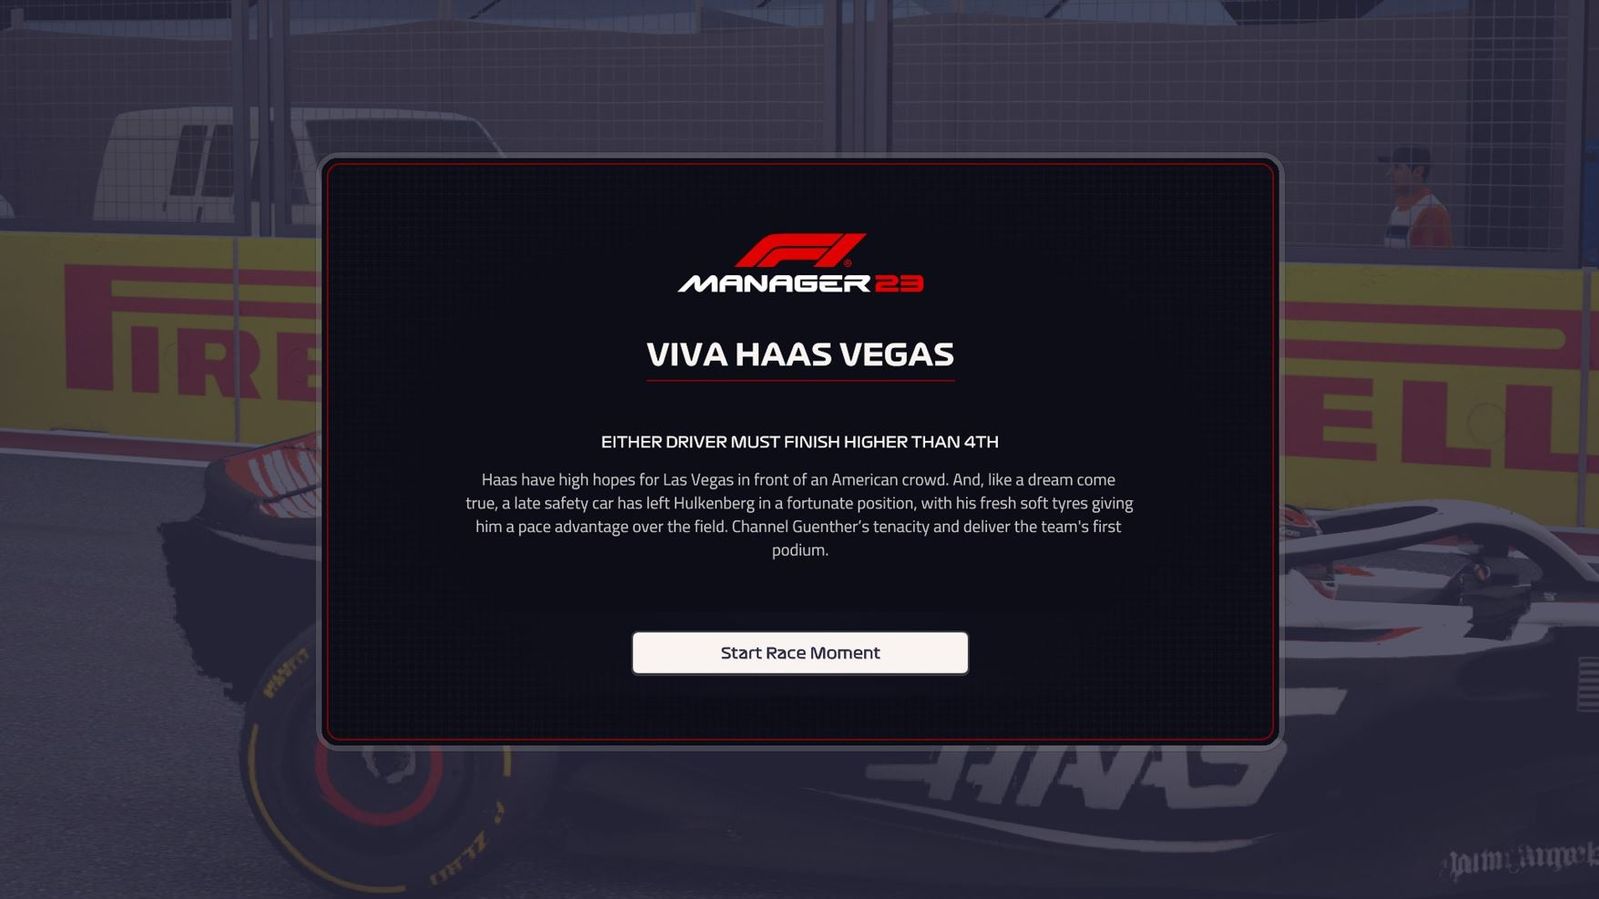 The Viva Haas Vegas scenario in F1 Manager 2023